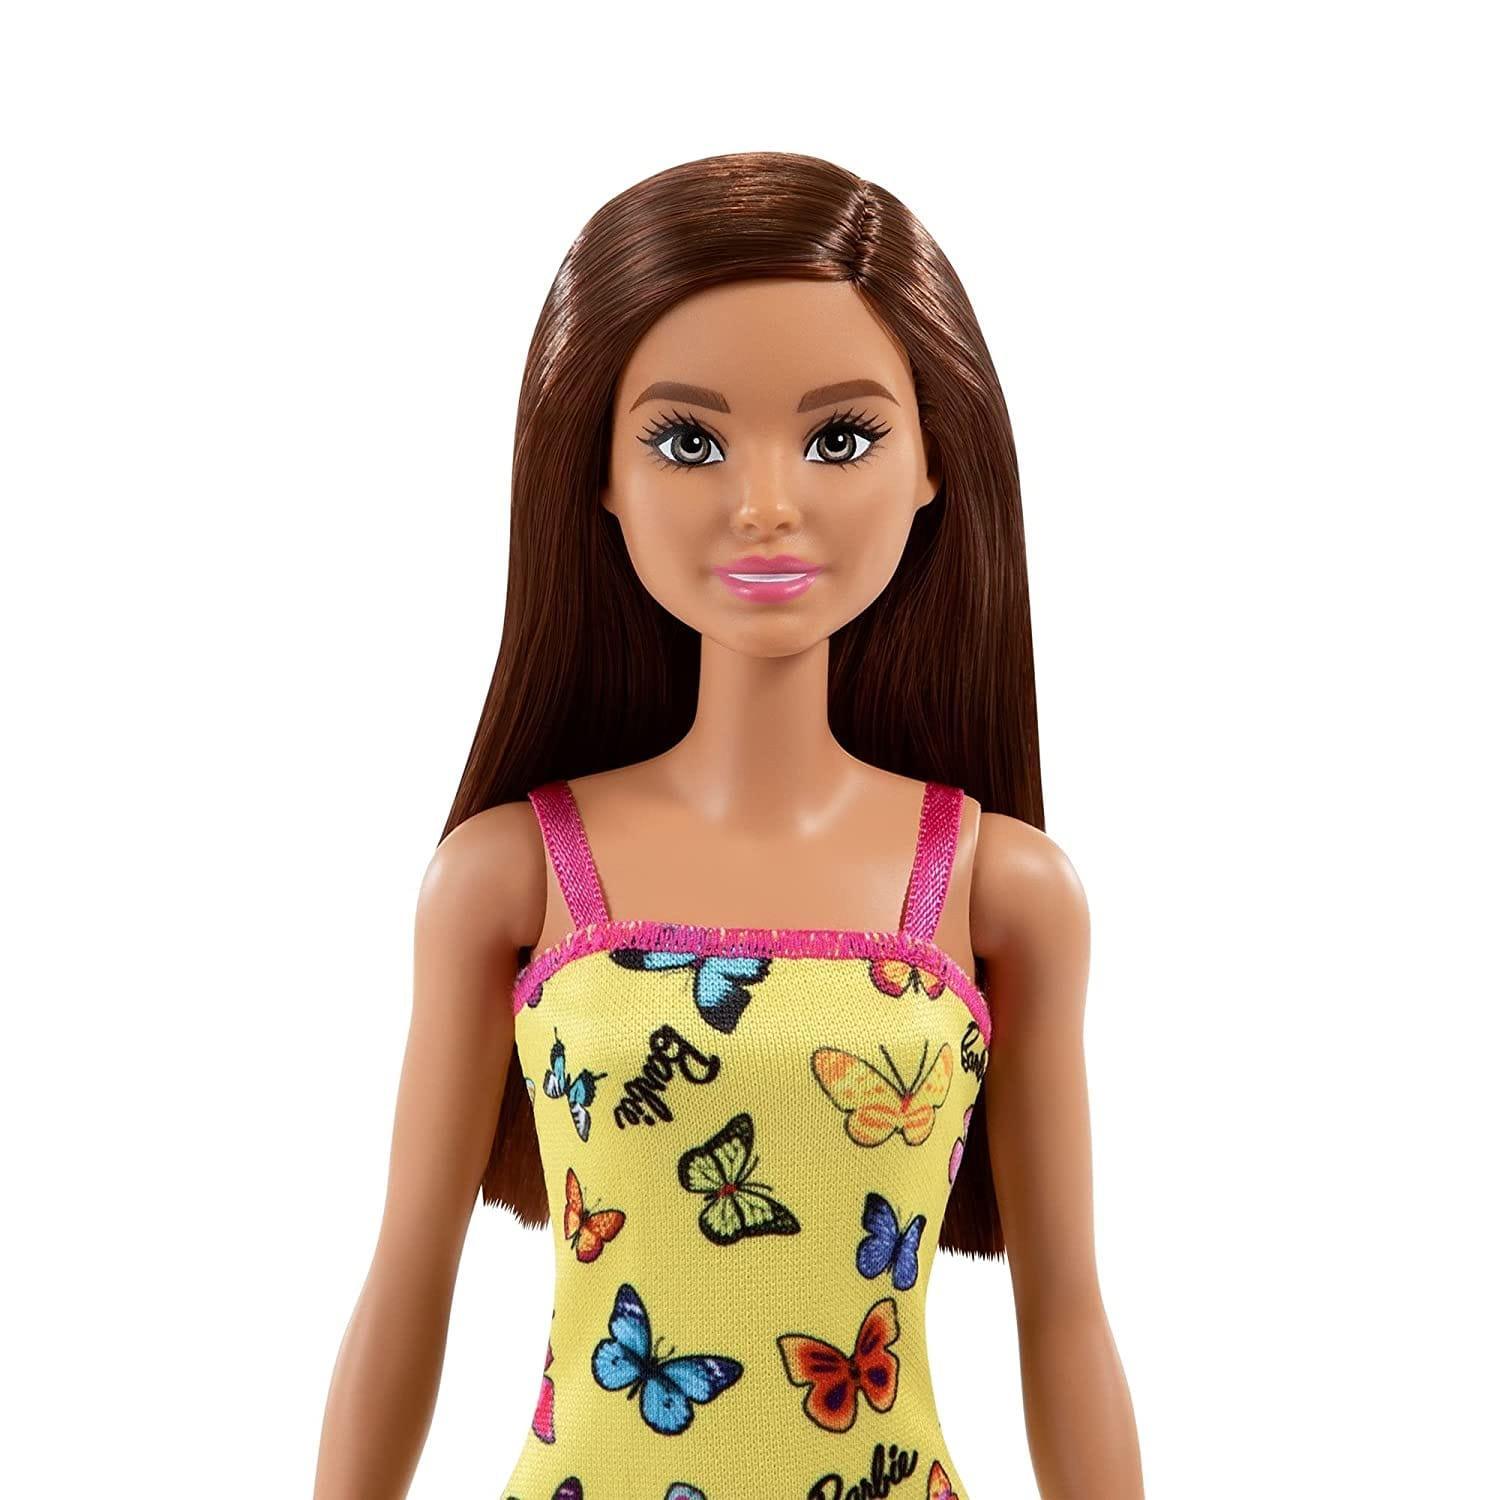 Barbie HBV08 - Fasionable Barbie Doll yellow